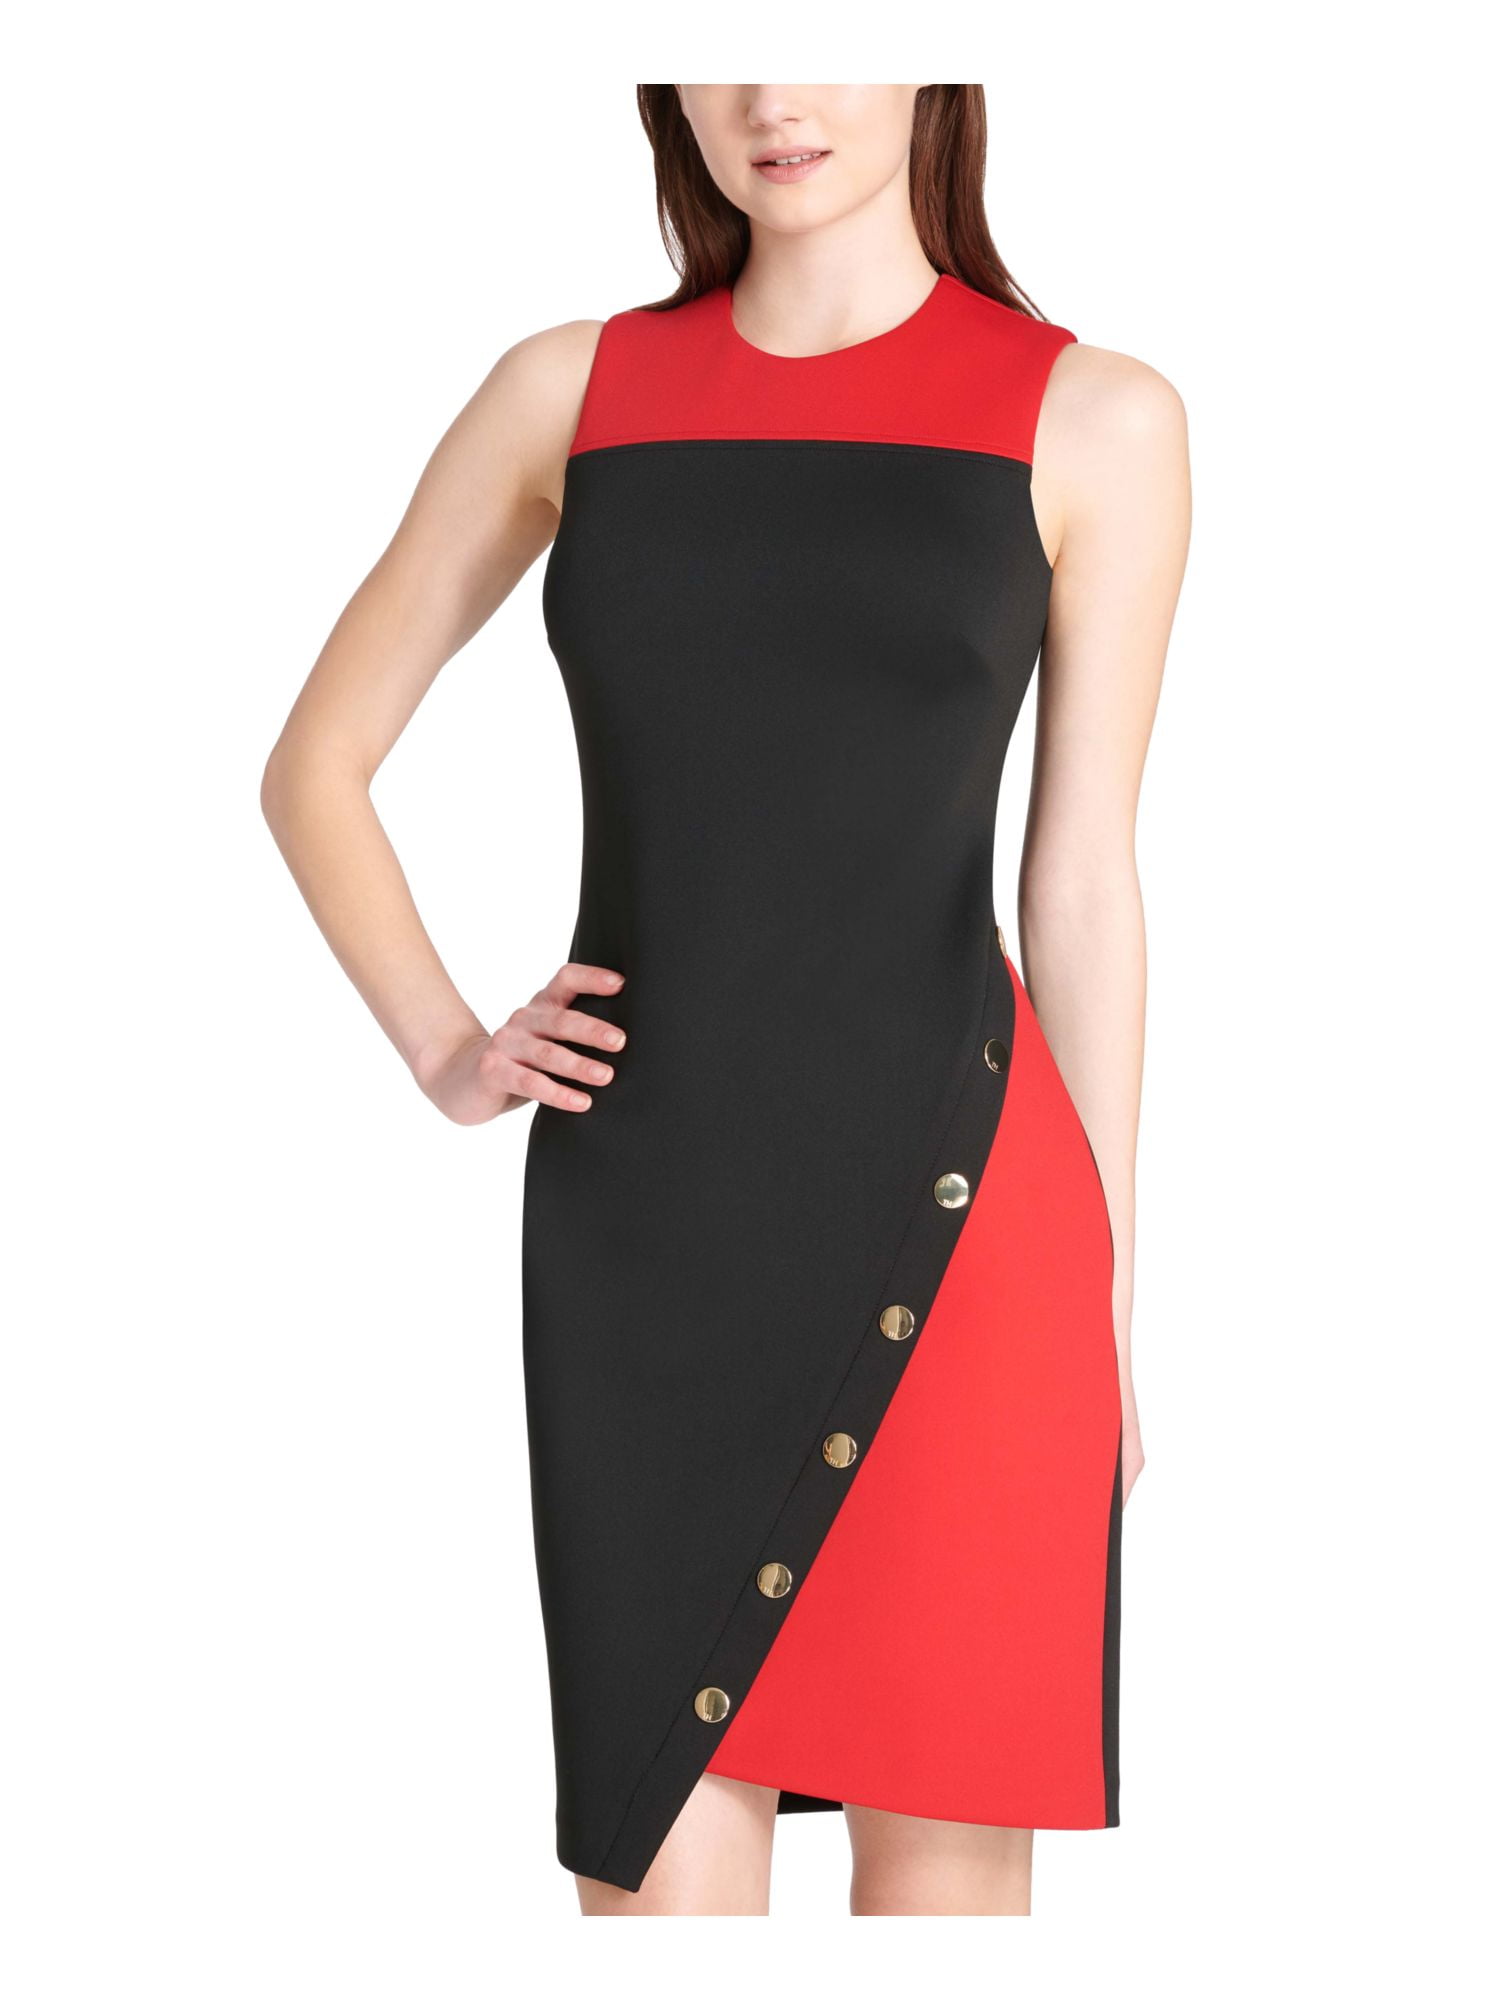 Dress Womens HILFIGER B+B Color Block + Fit Flare Red $99 8 TOMMY Embellished